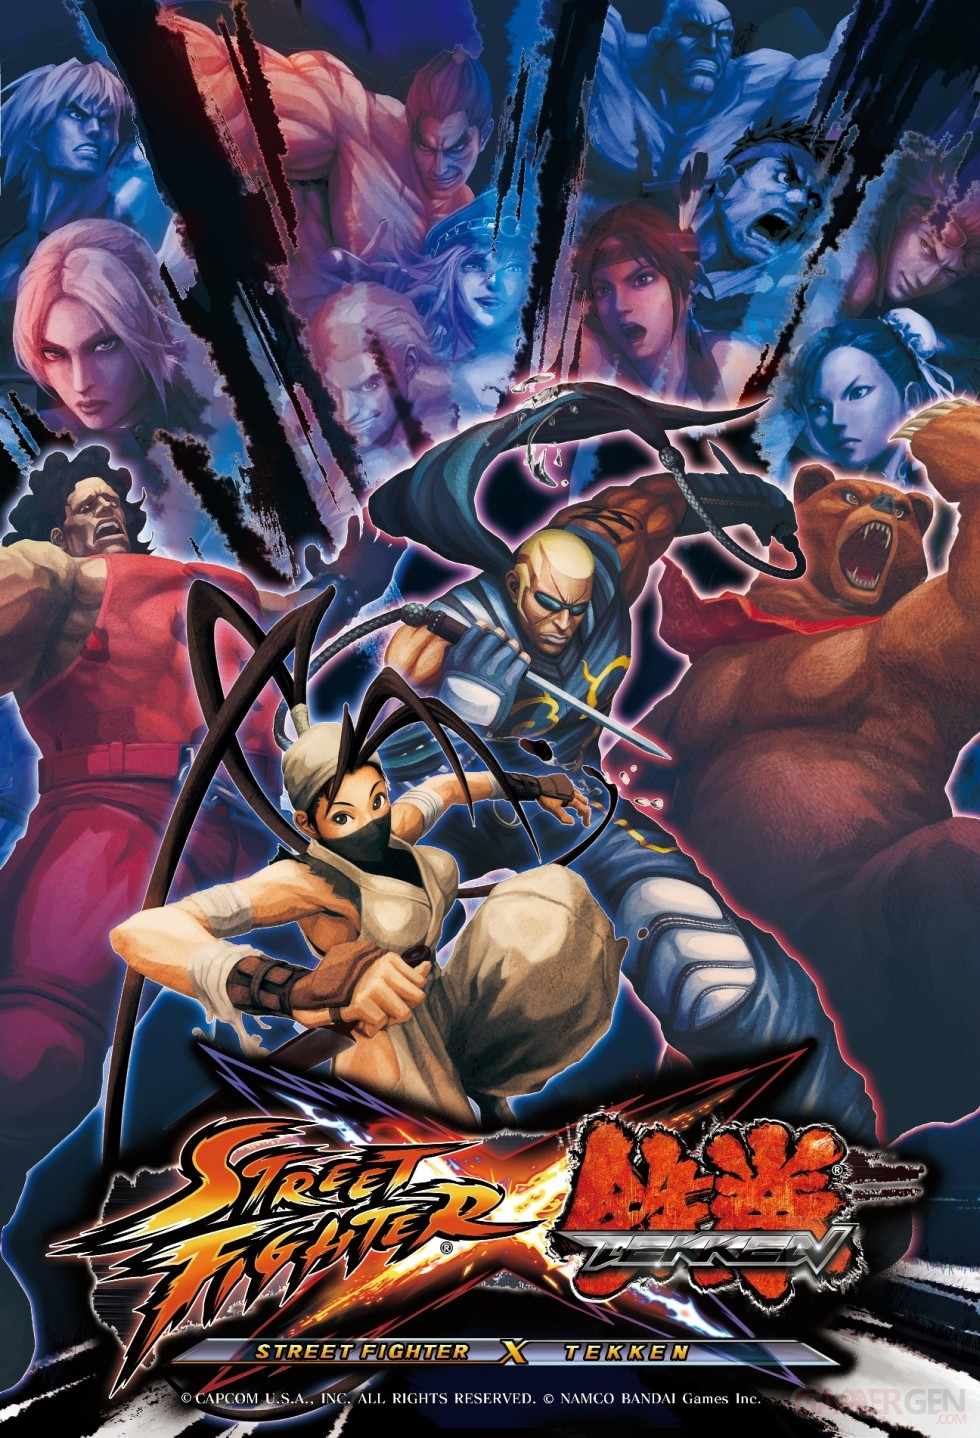 Street-Fighter-x-Tekken-Image-17-08-2011-10